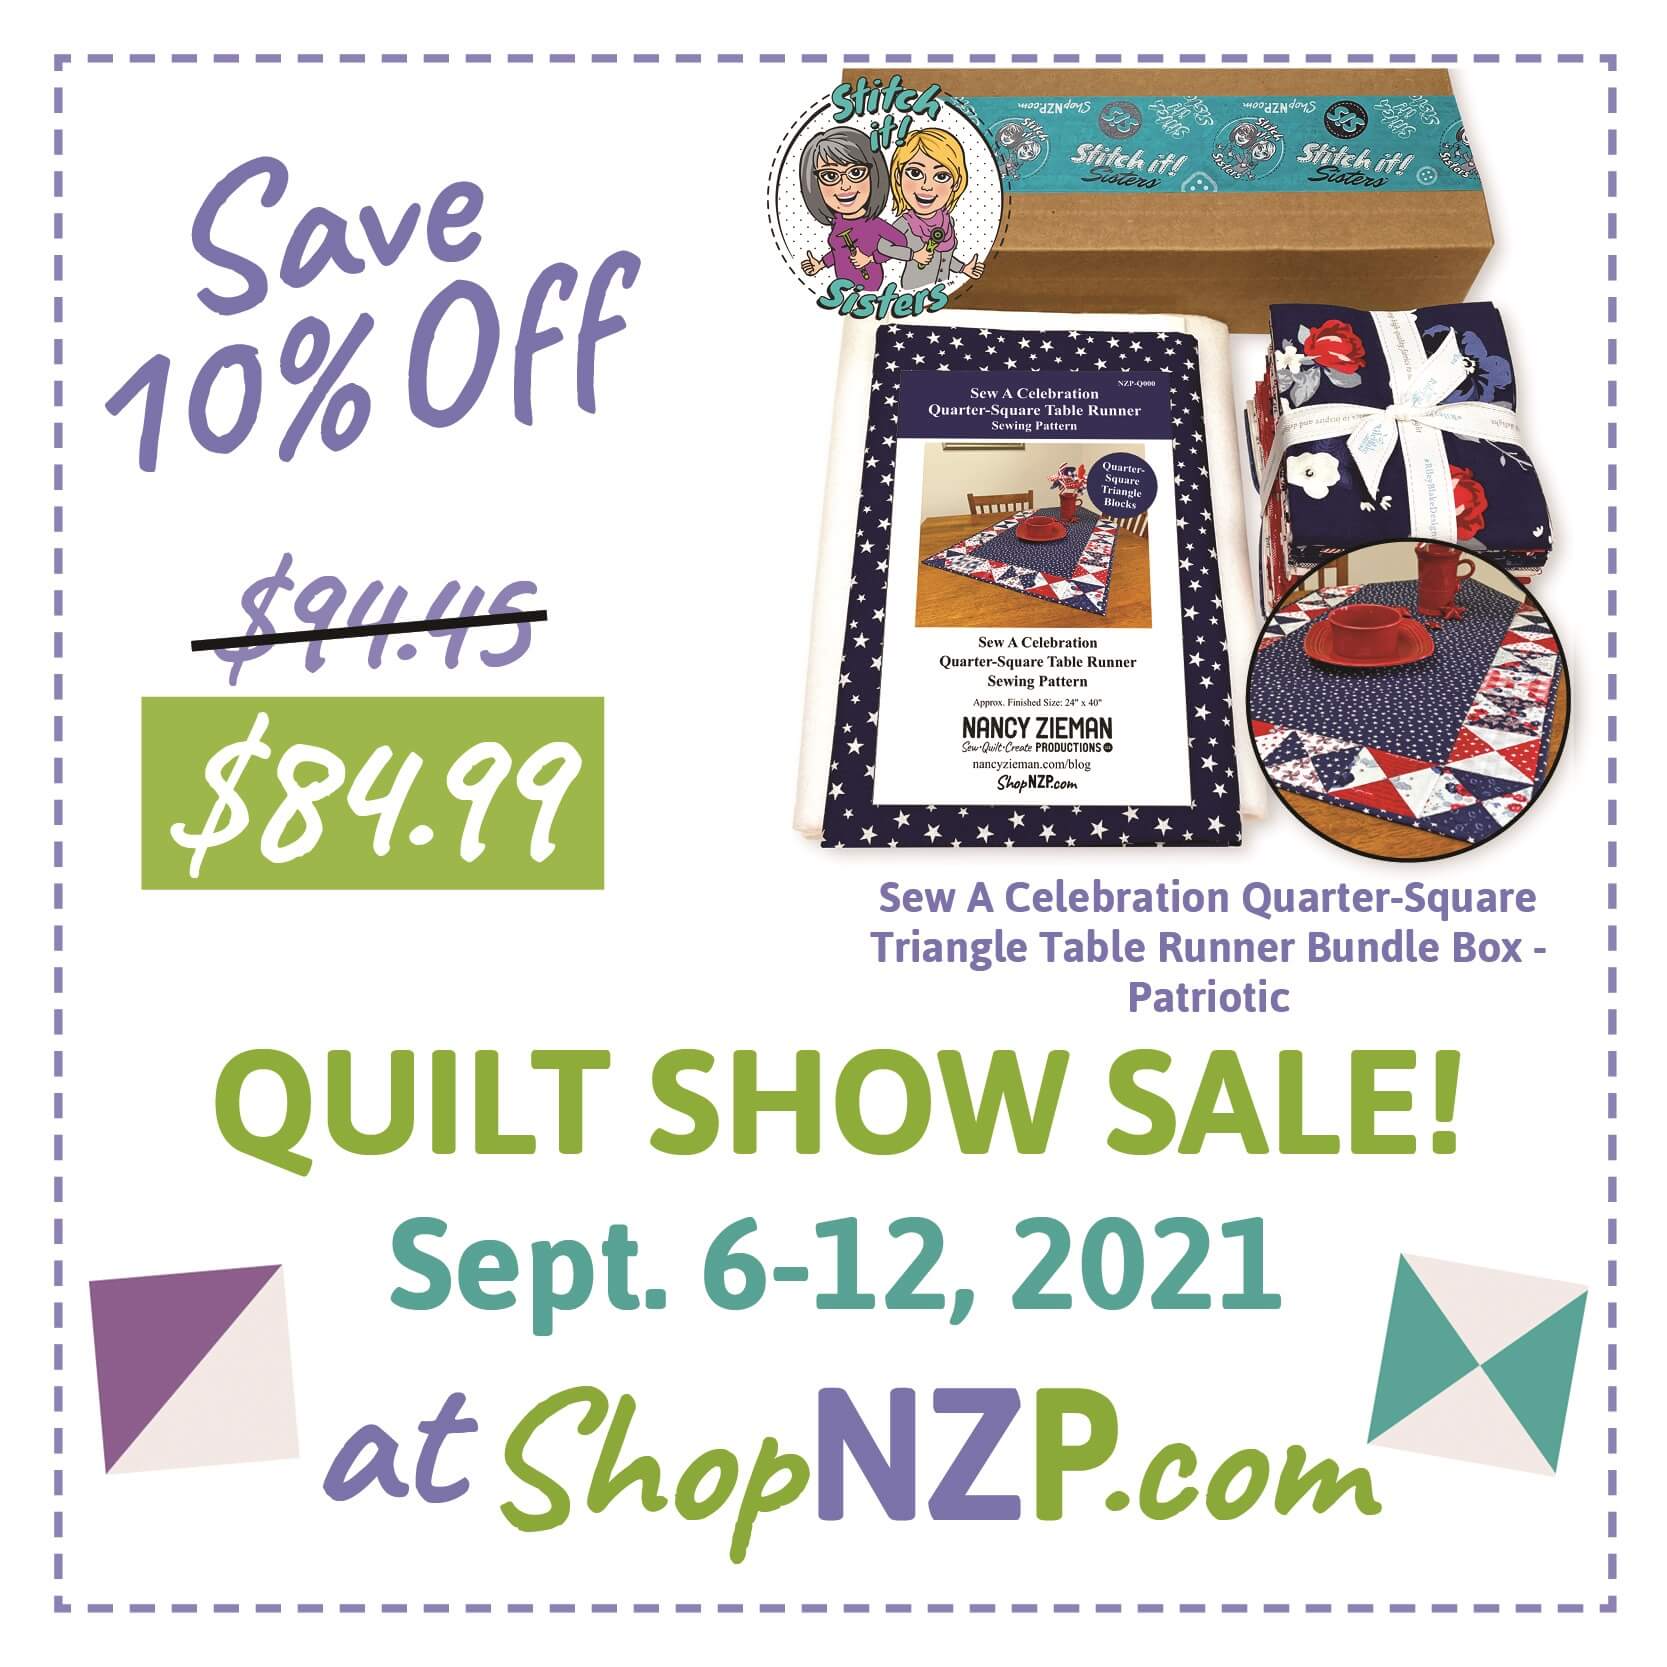 Save 10 Percent off Sew A Celebration Quarter-Square Triangle Table Runner Bundle Box - Patriotic at Nancy Zieman Productions at ShopNZP